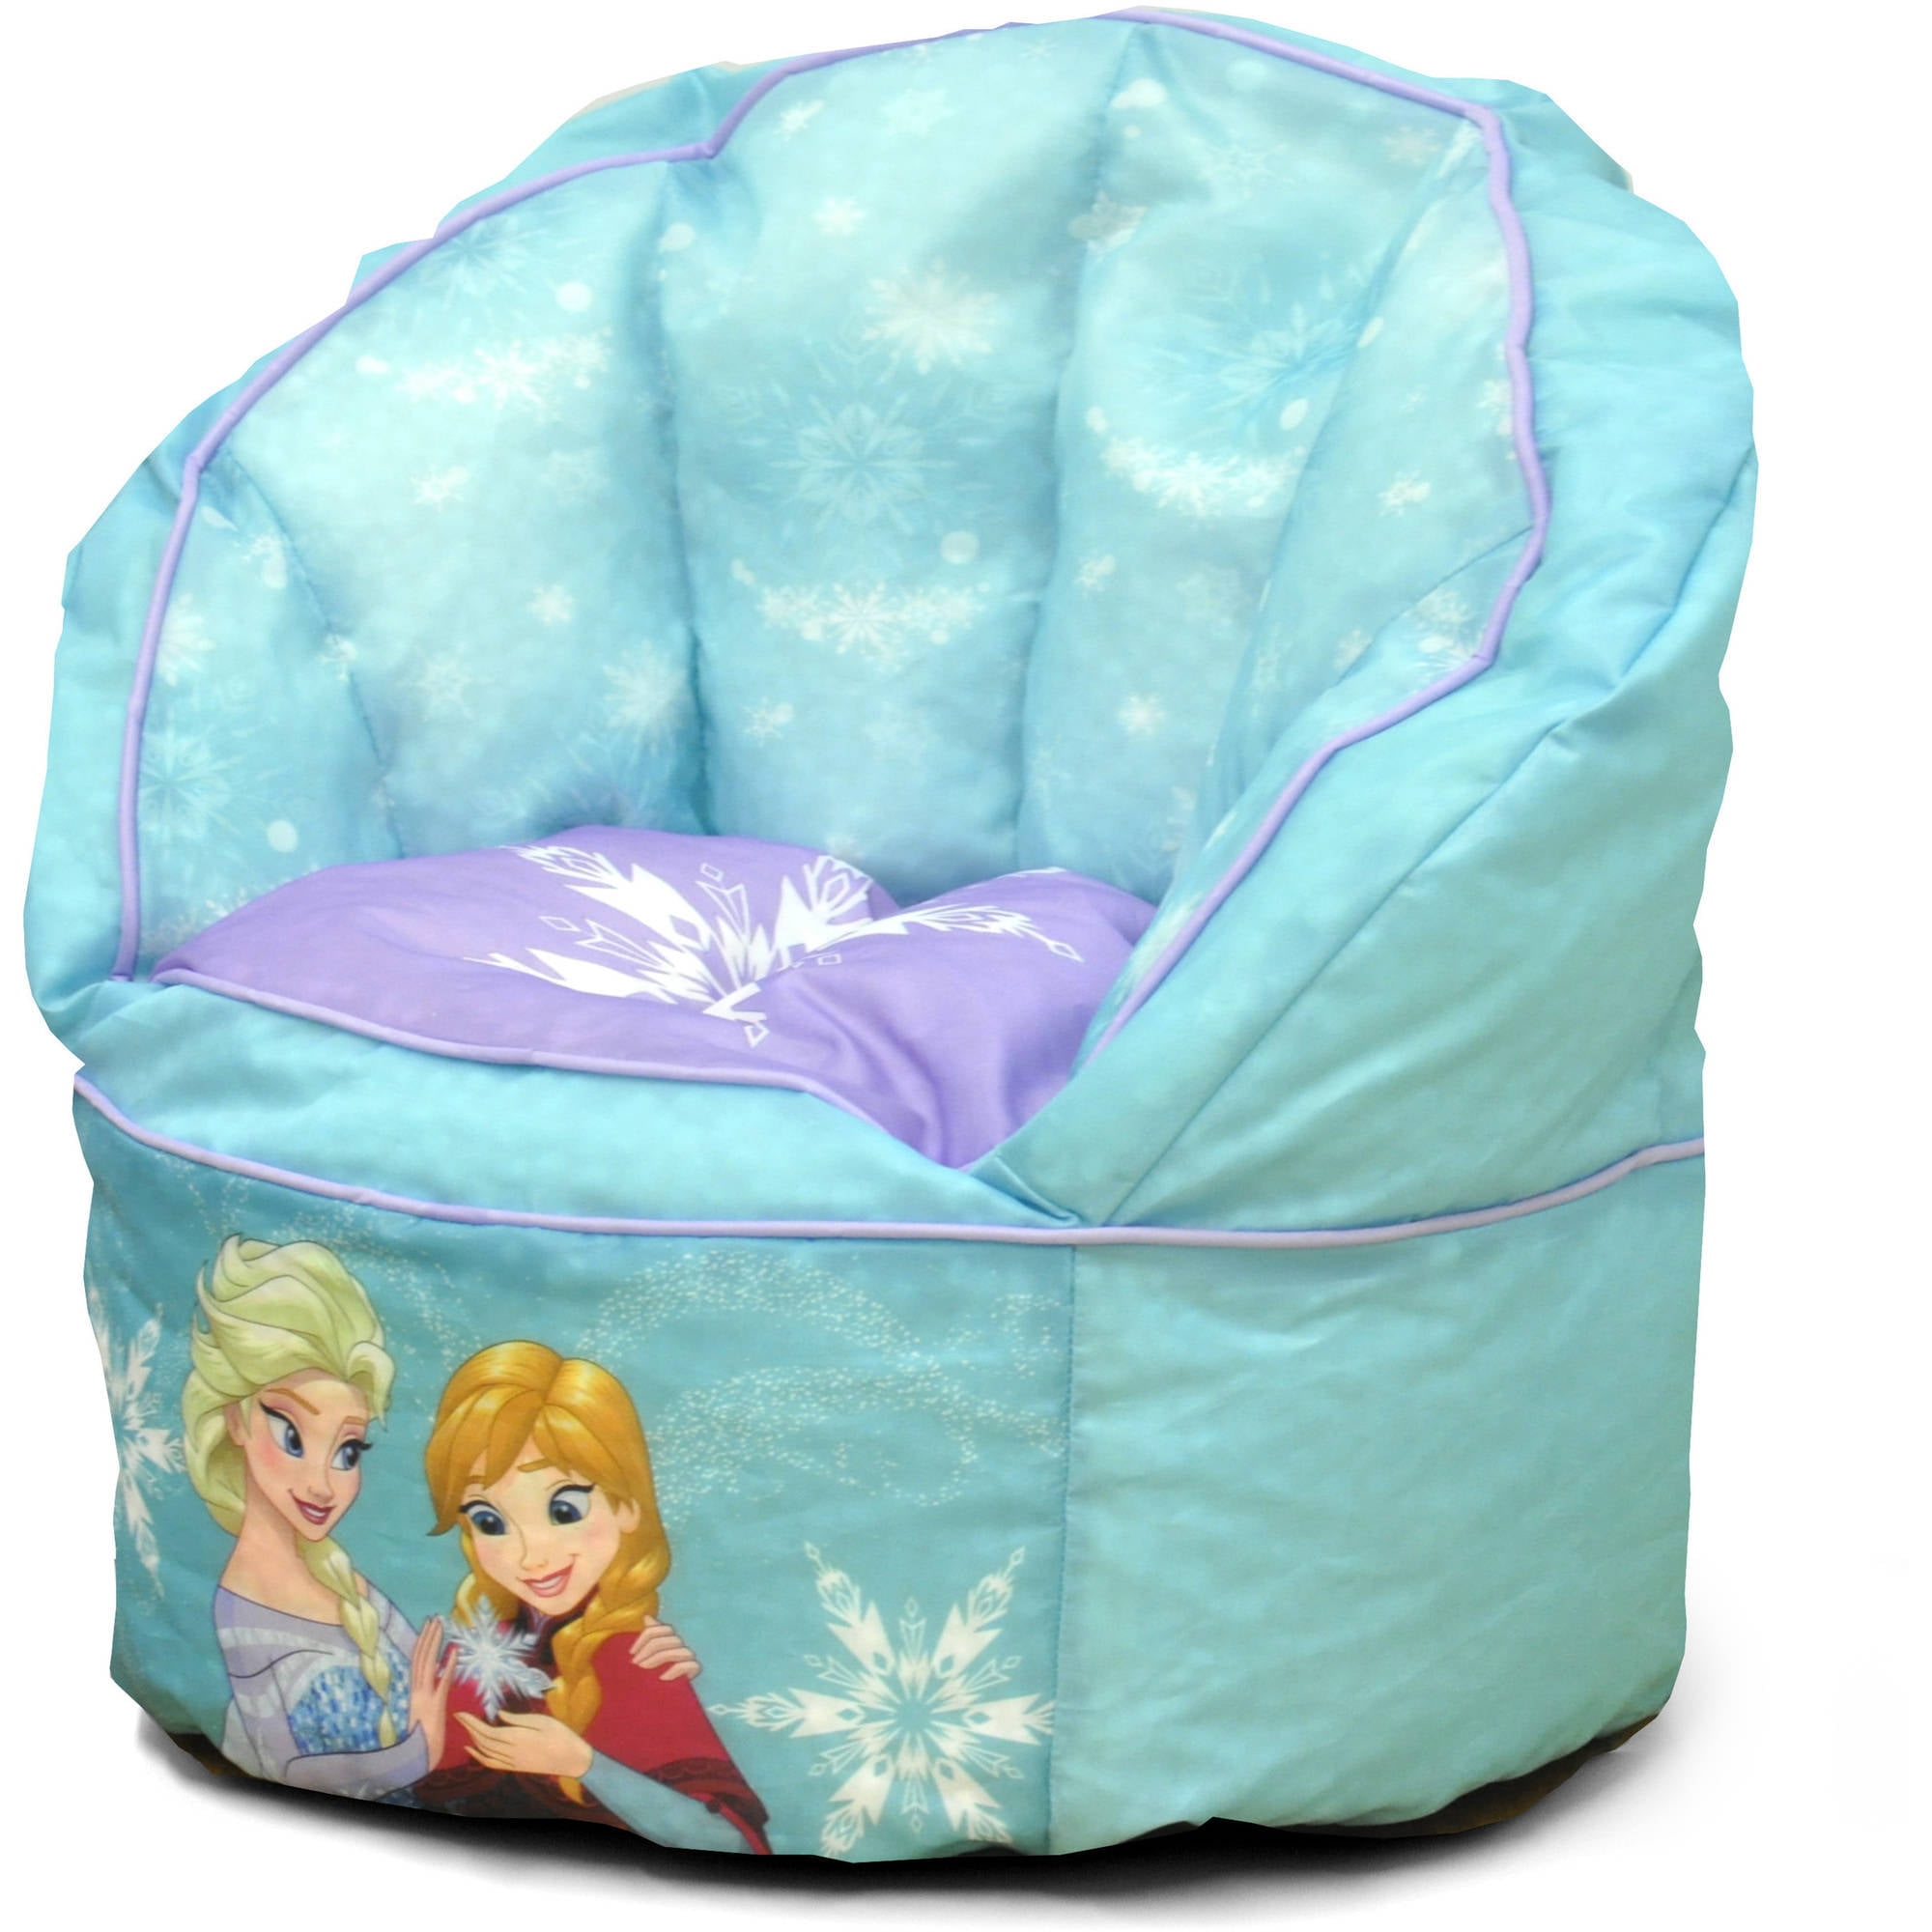 Disney Frozen Sofa Bean Bag Chair With